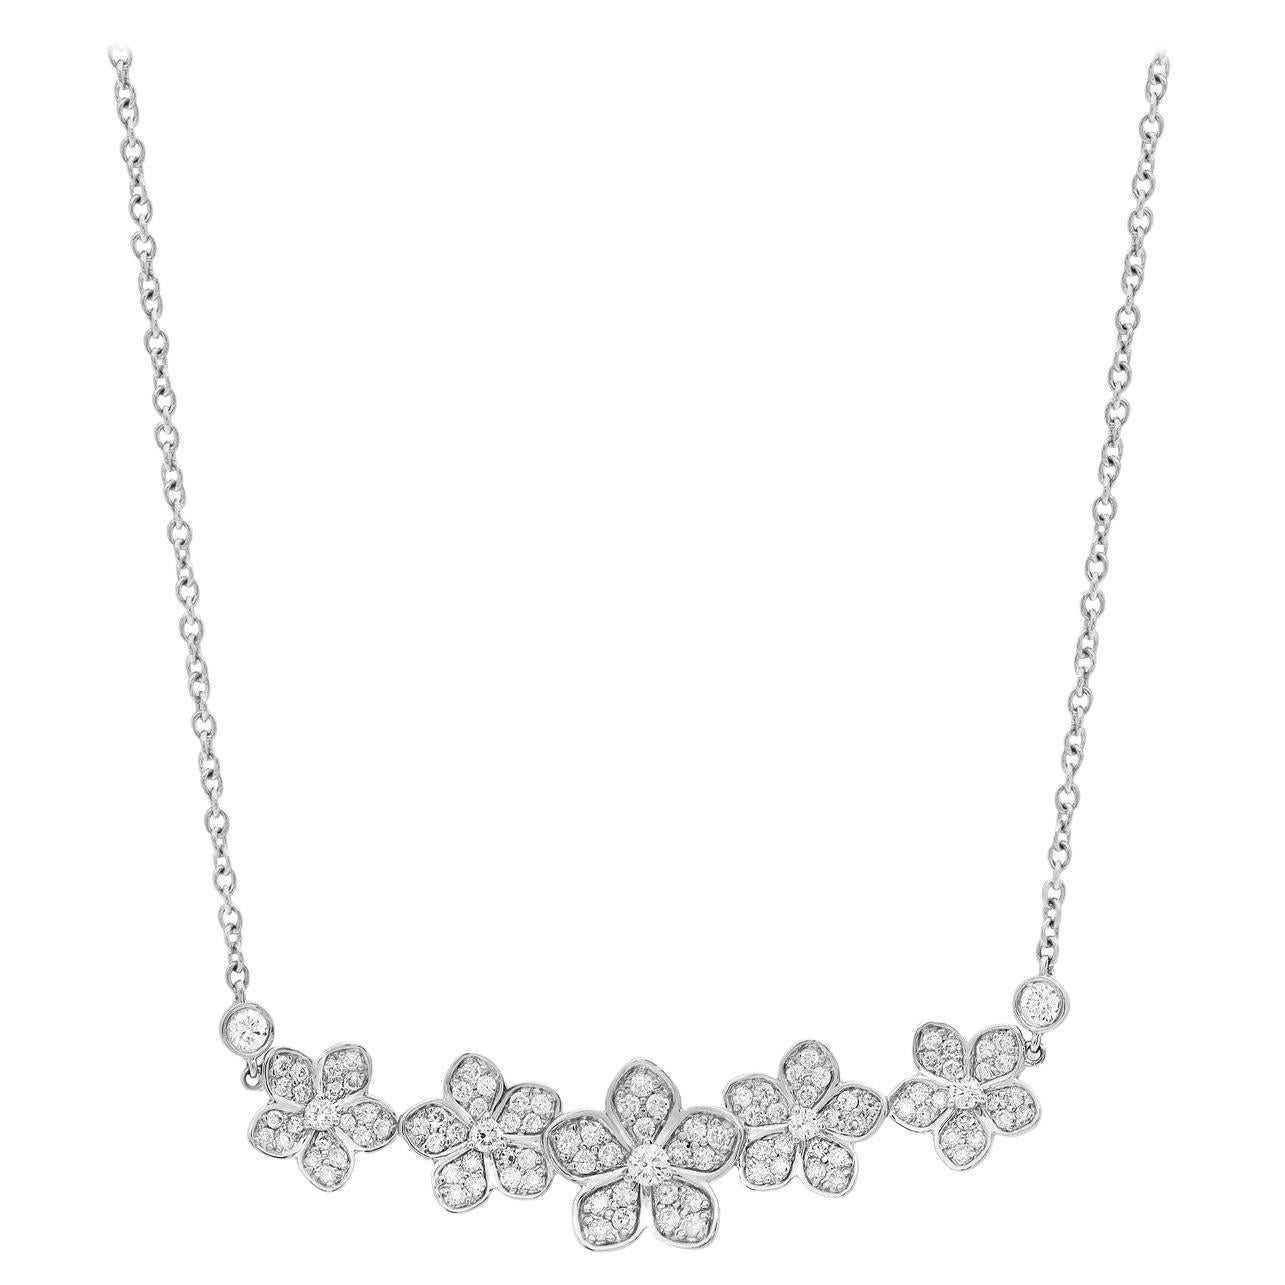 0.87 Carat Diamond Bar Pendant Necklace in 18K White Gold